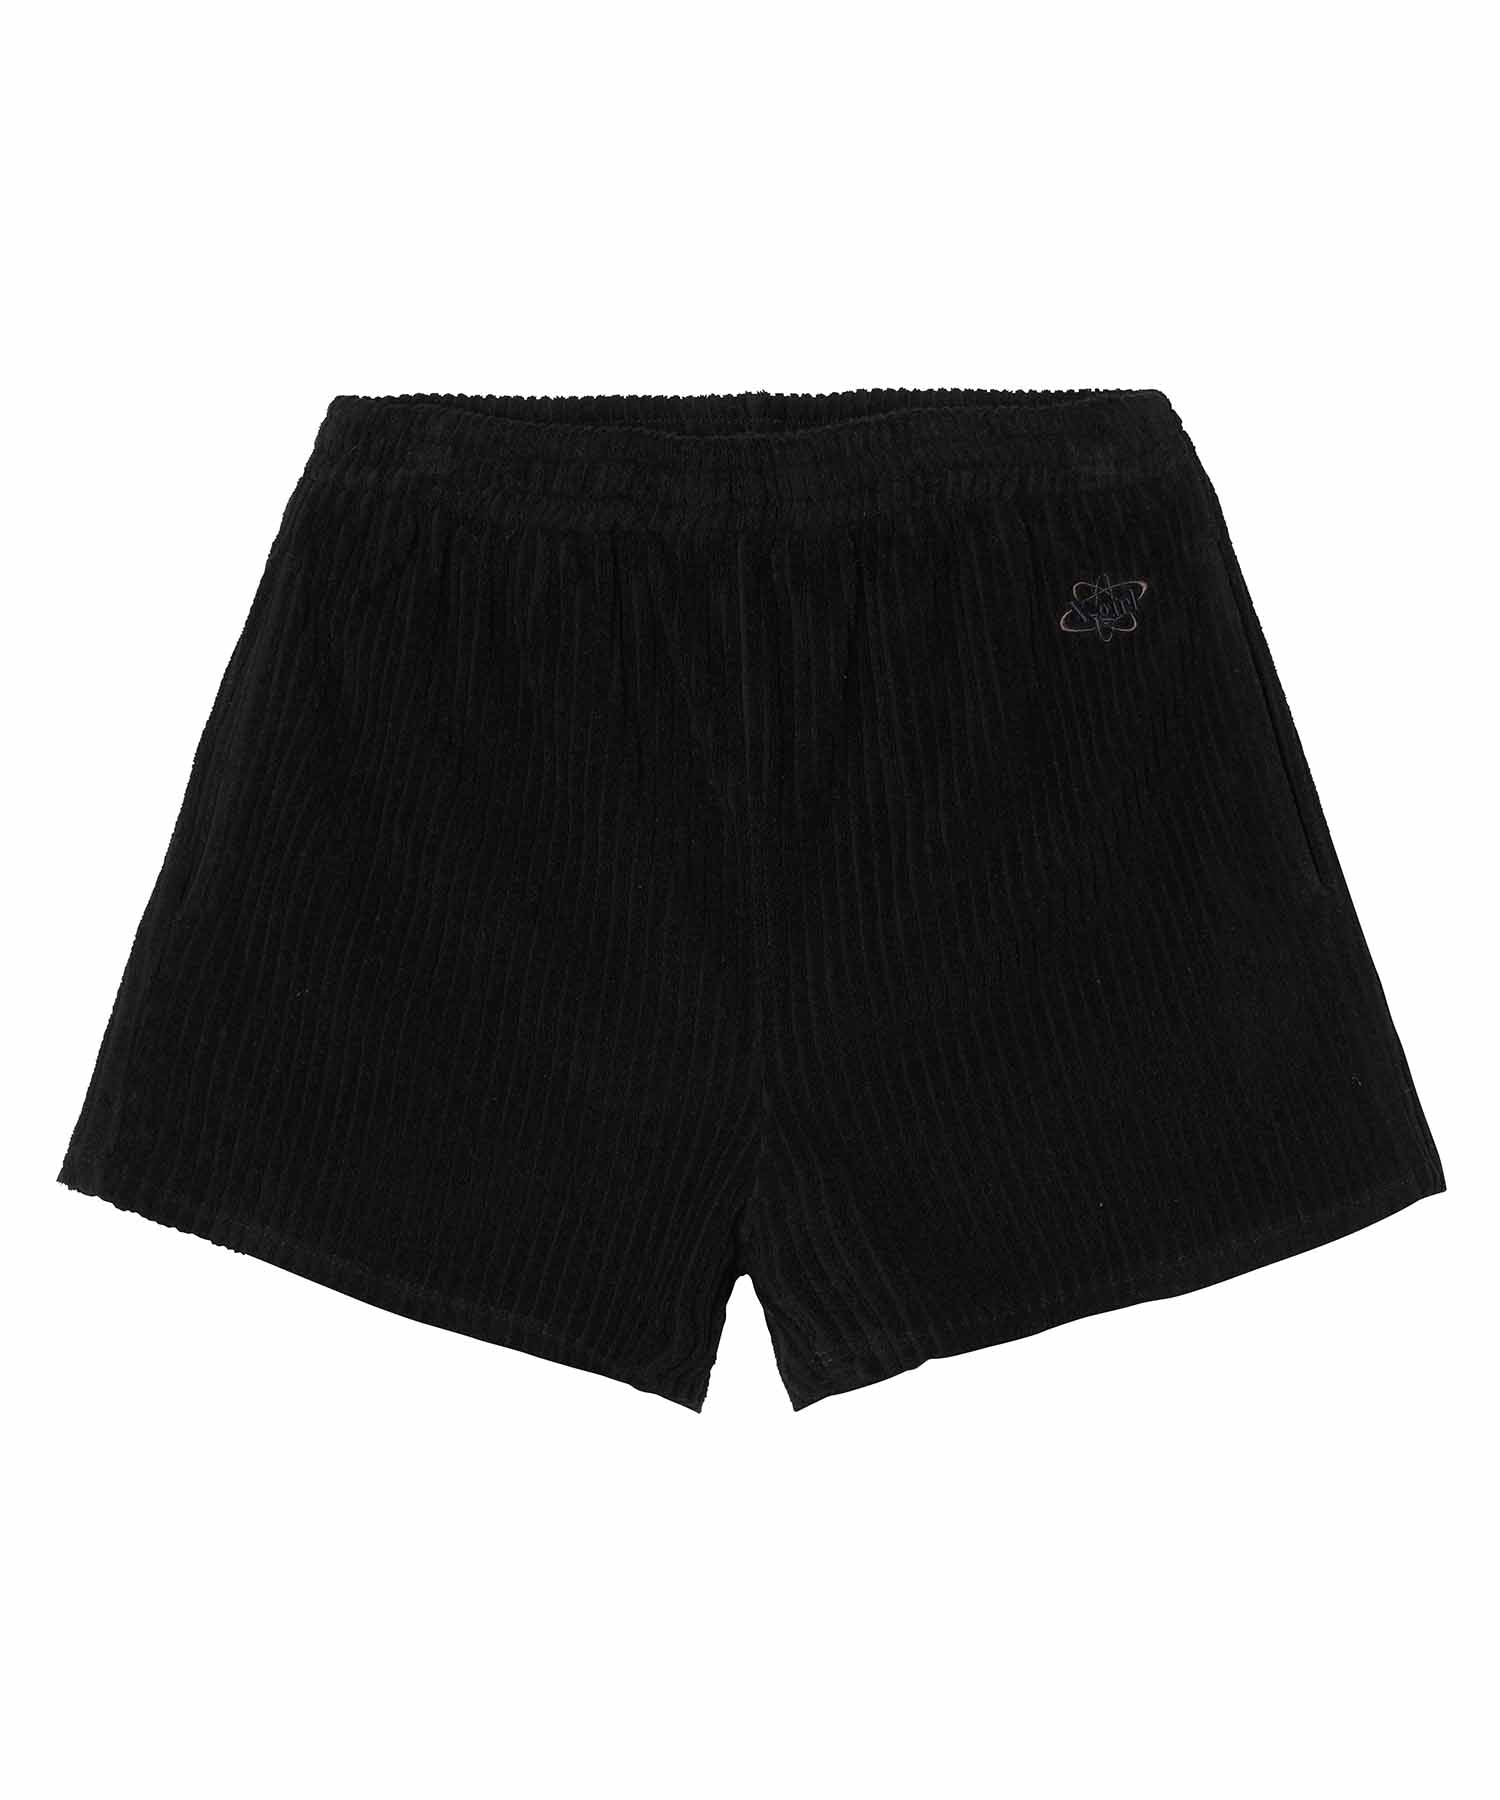 Limited edition girls short pants – T bar